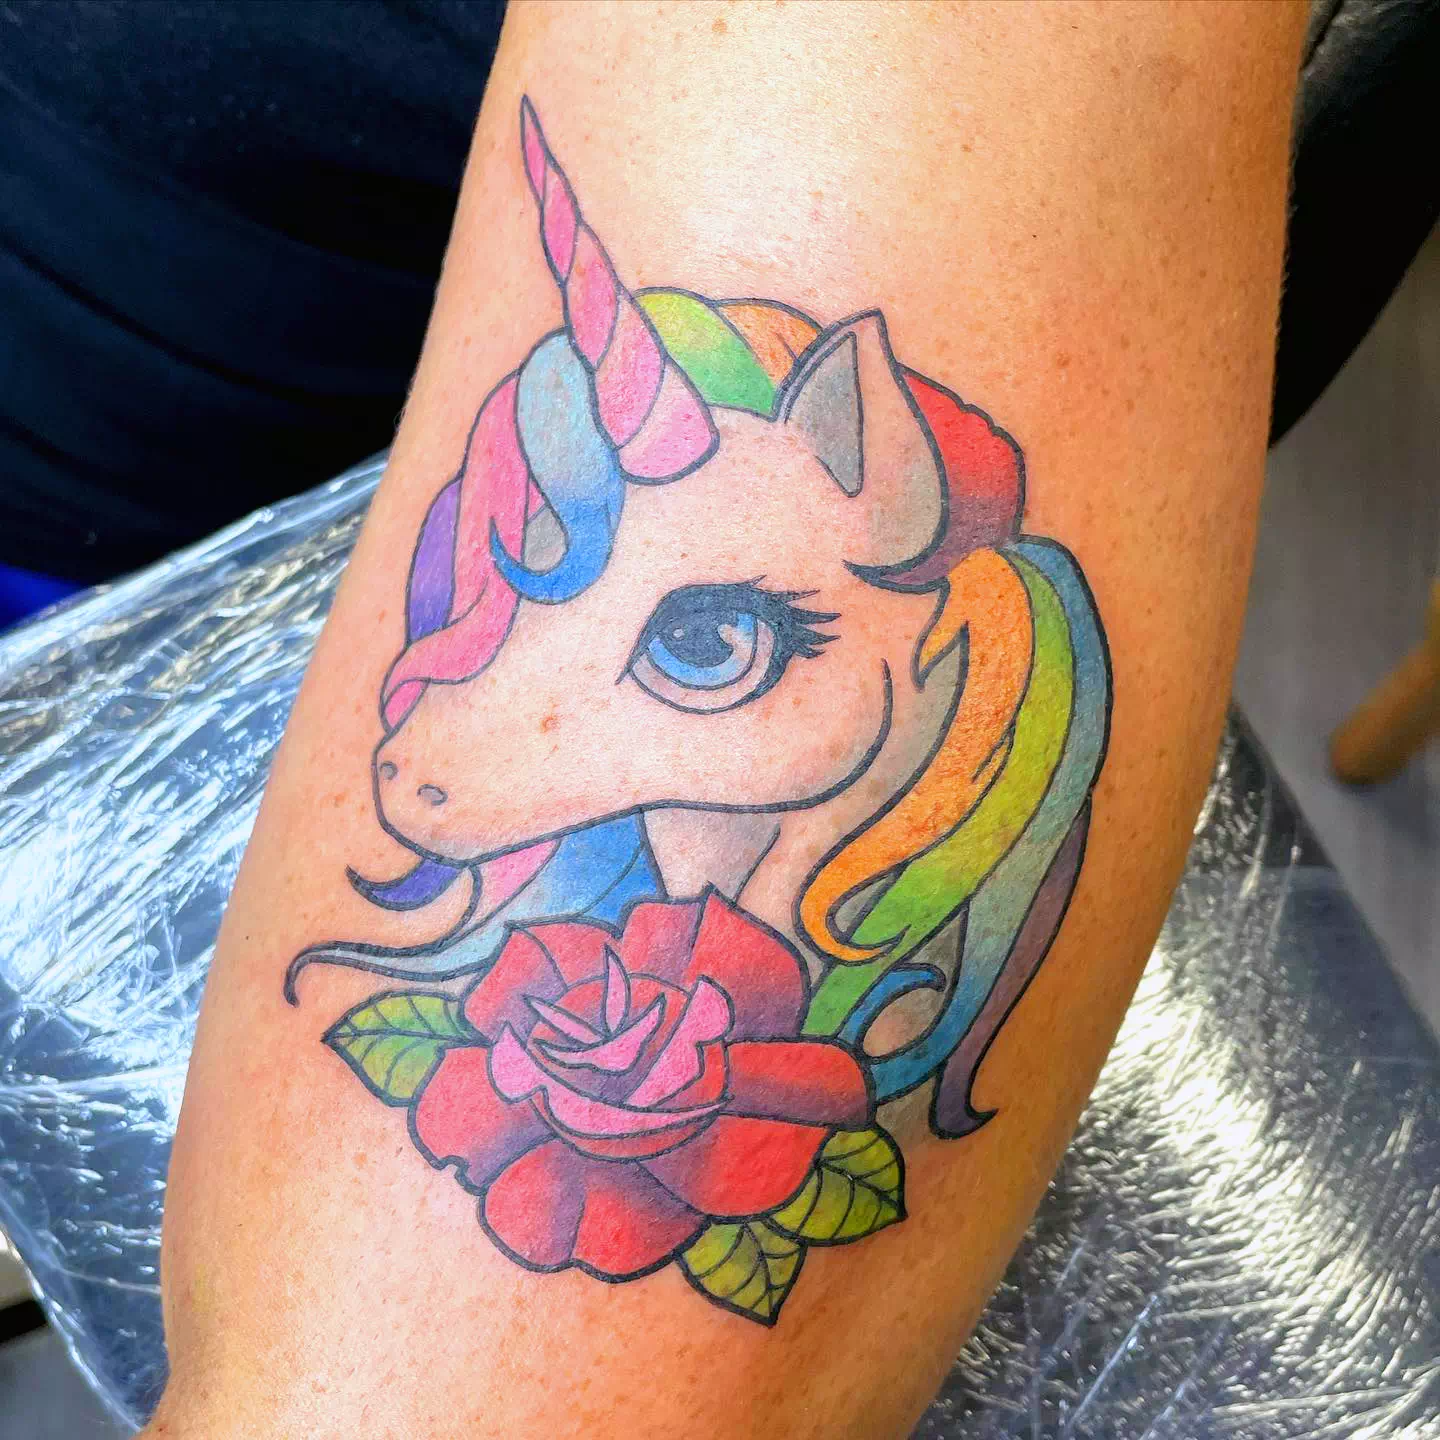 Delicada idea de color para un tatuaje de unicornio